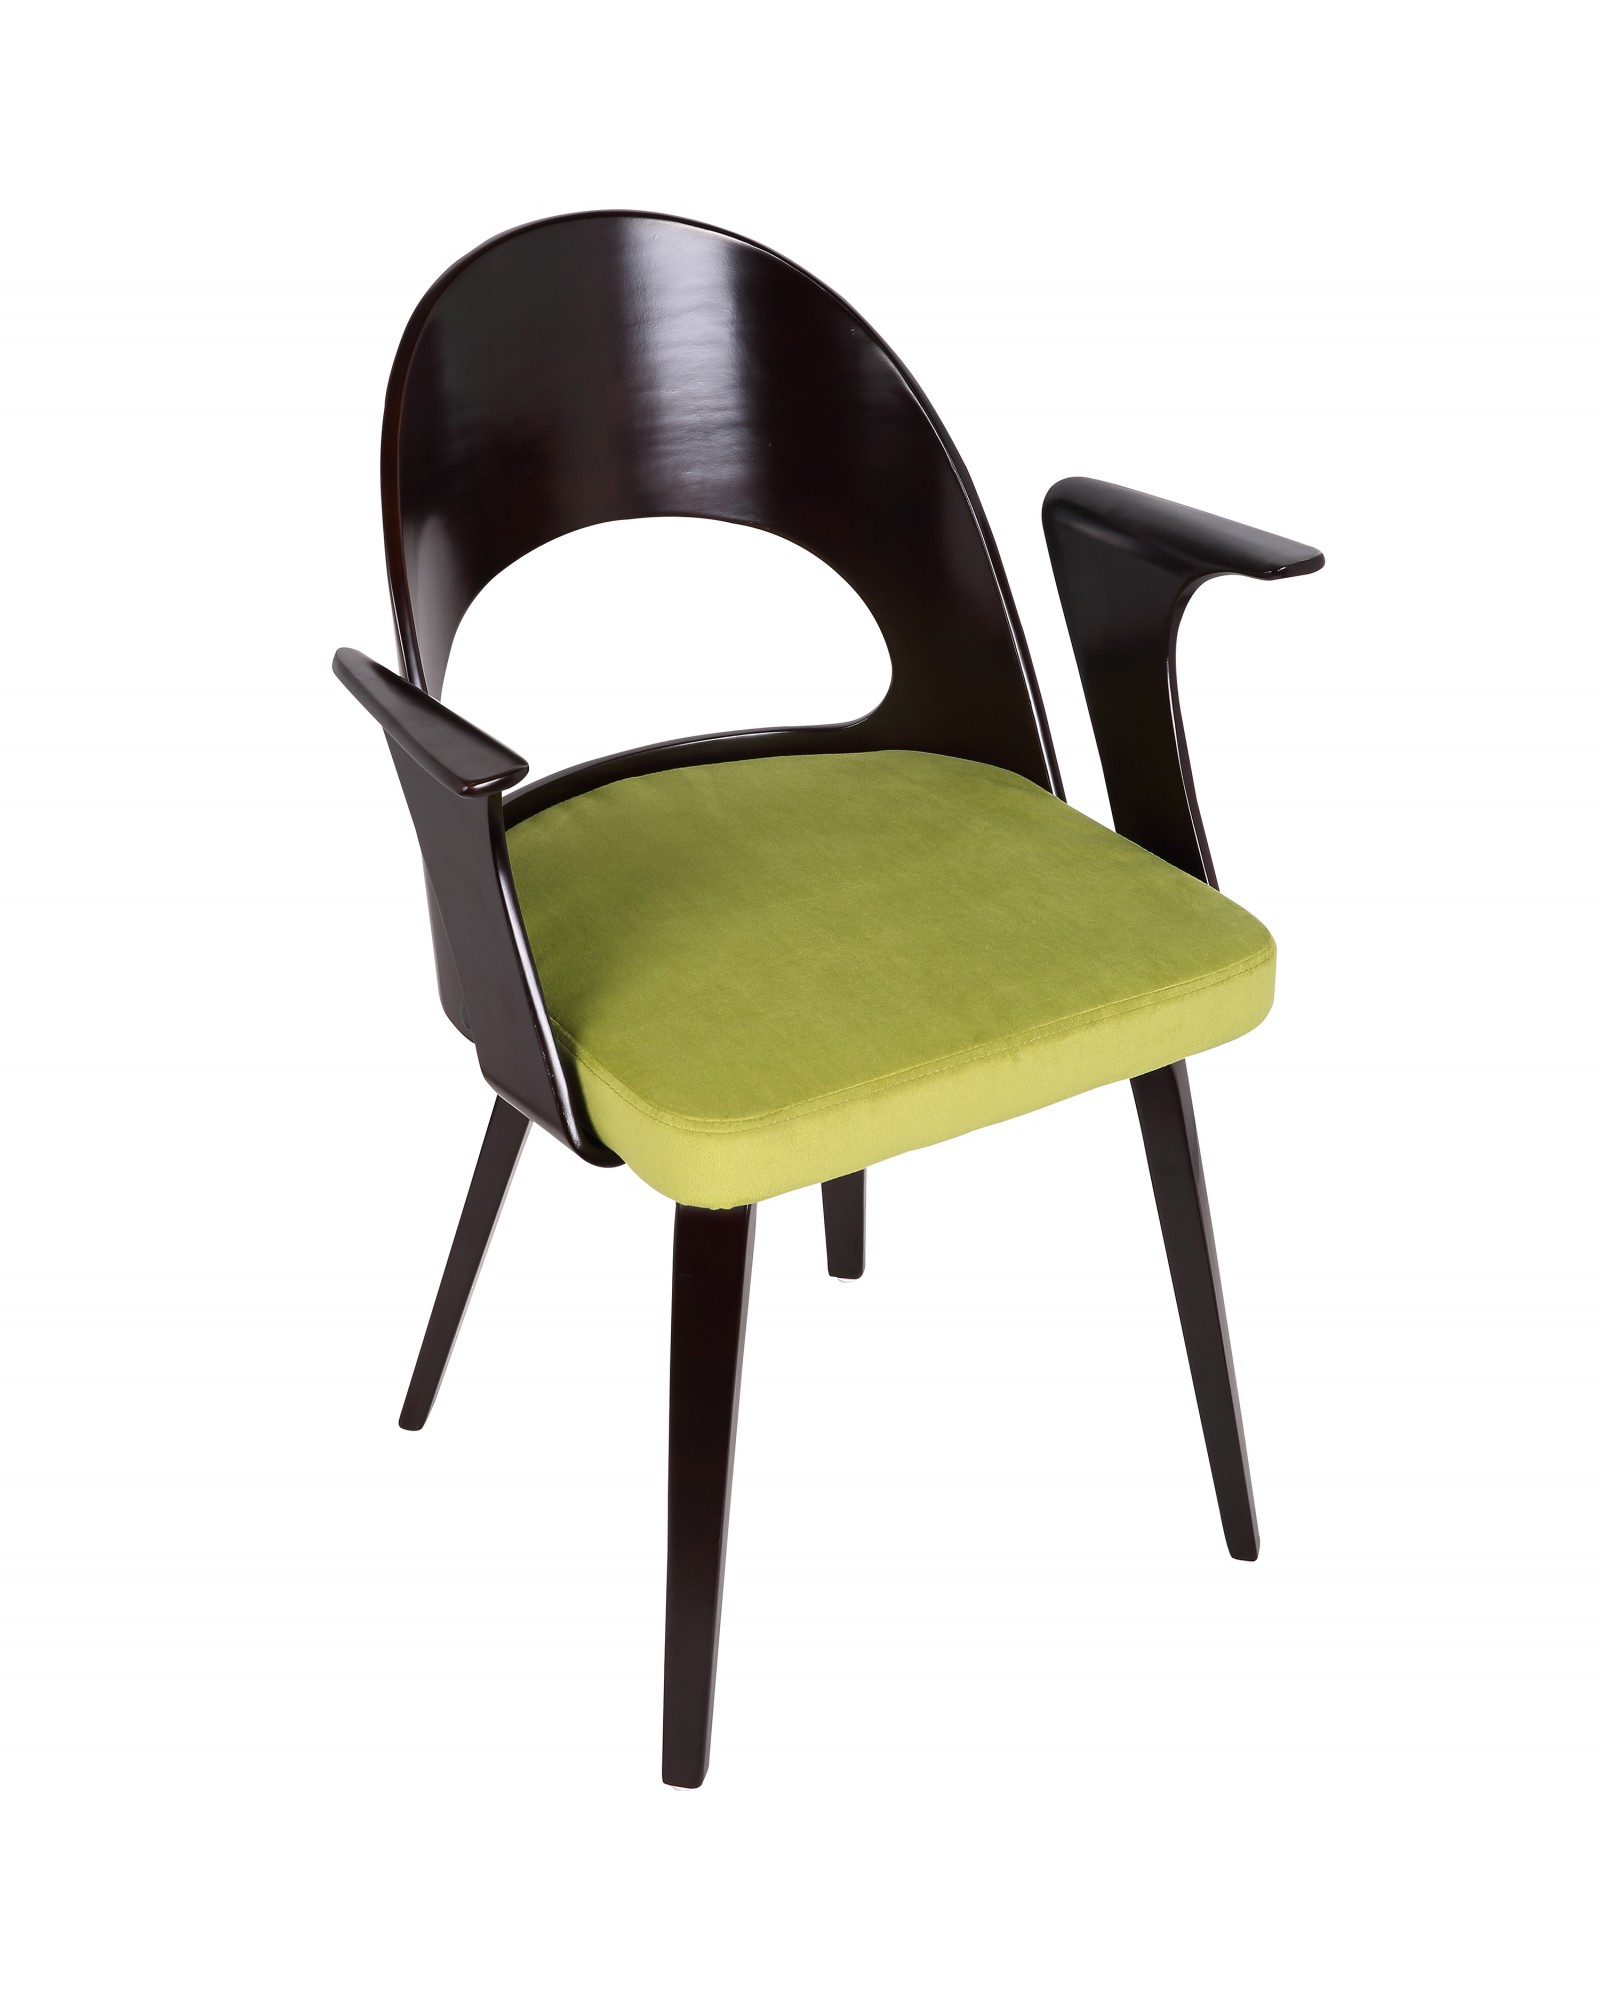 Verino Mid-Century Modern Dining/Accent Chair in Espresso with Green Velvet